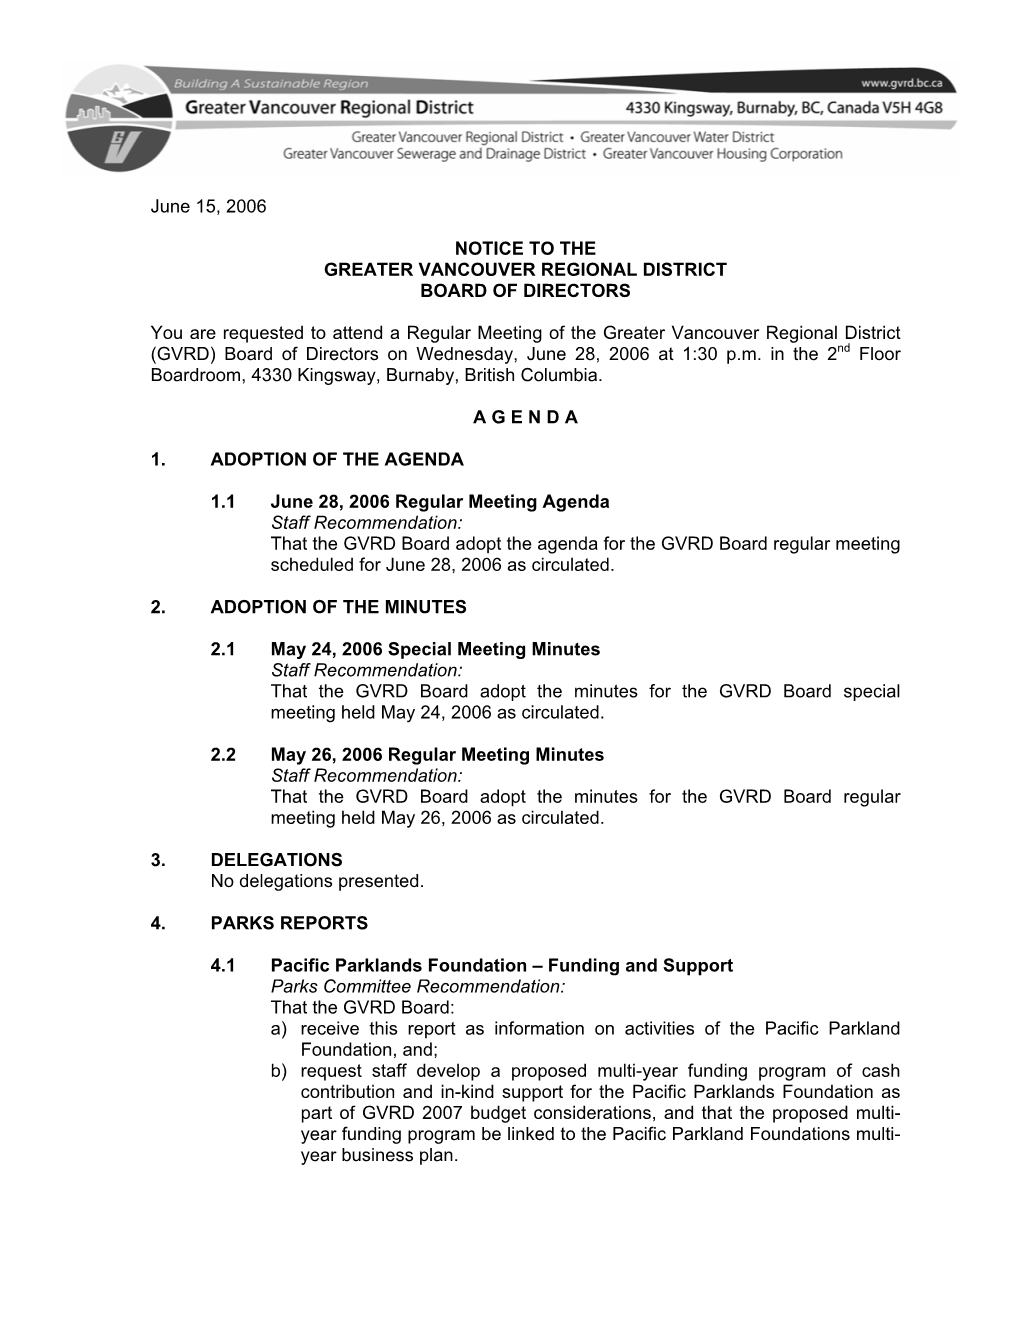 GVRD Board Meeting- June 28, 2006- Agenda